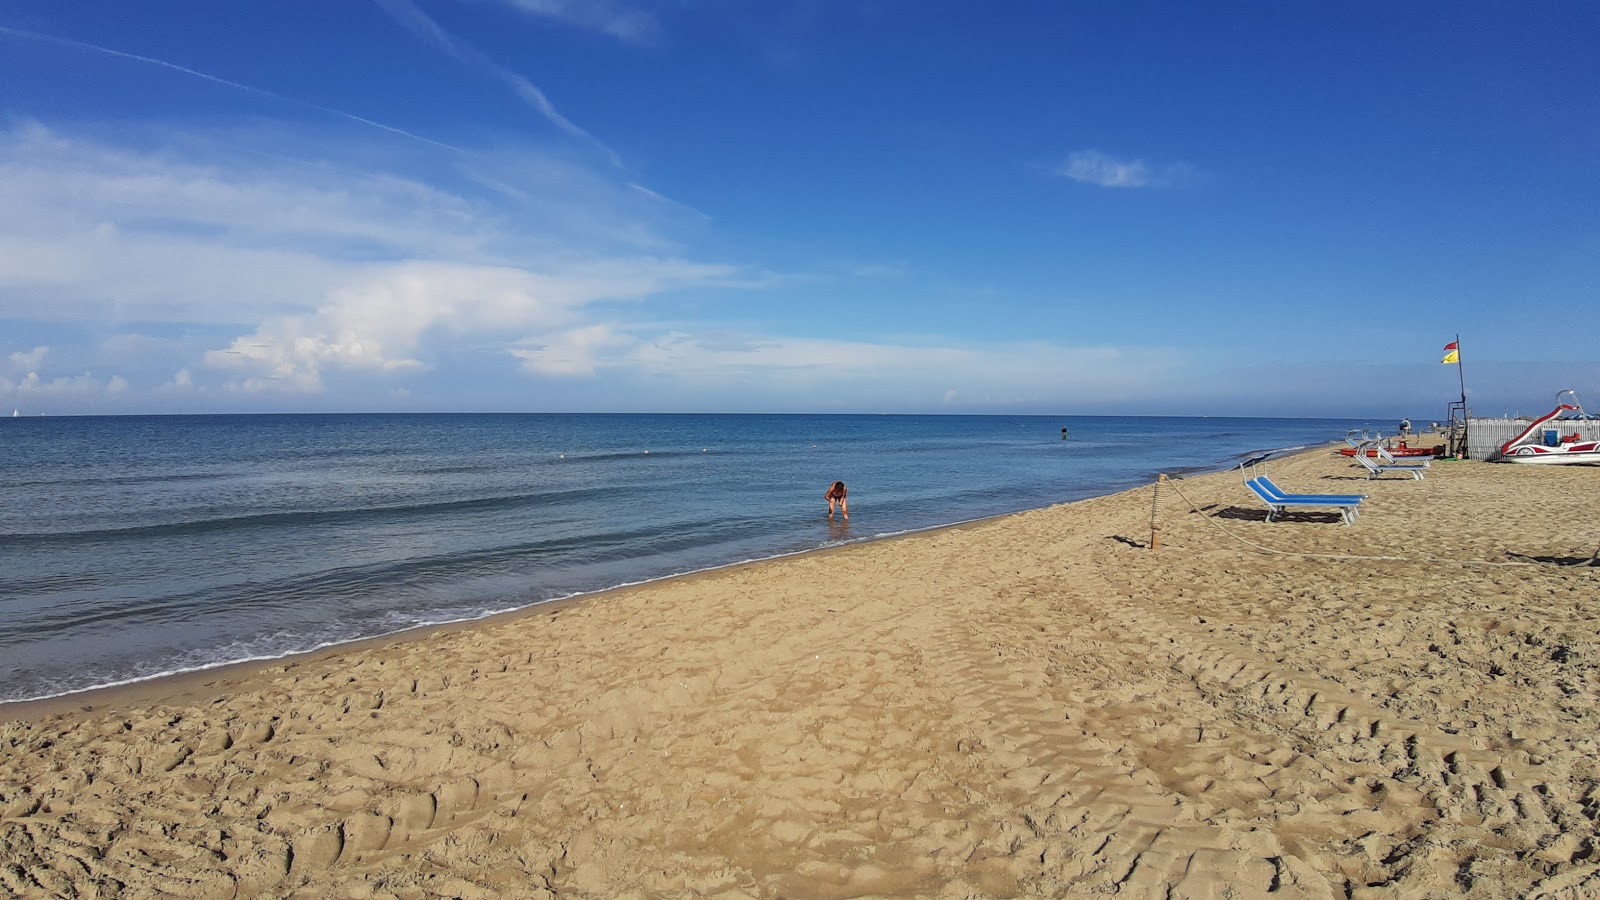 Photo of Spiaggia Libera Tirrenia with long straight shore